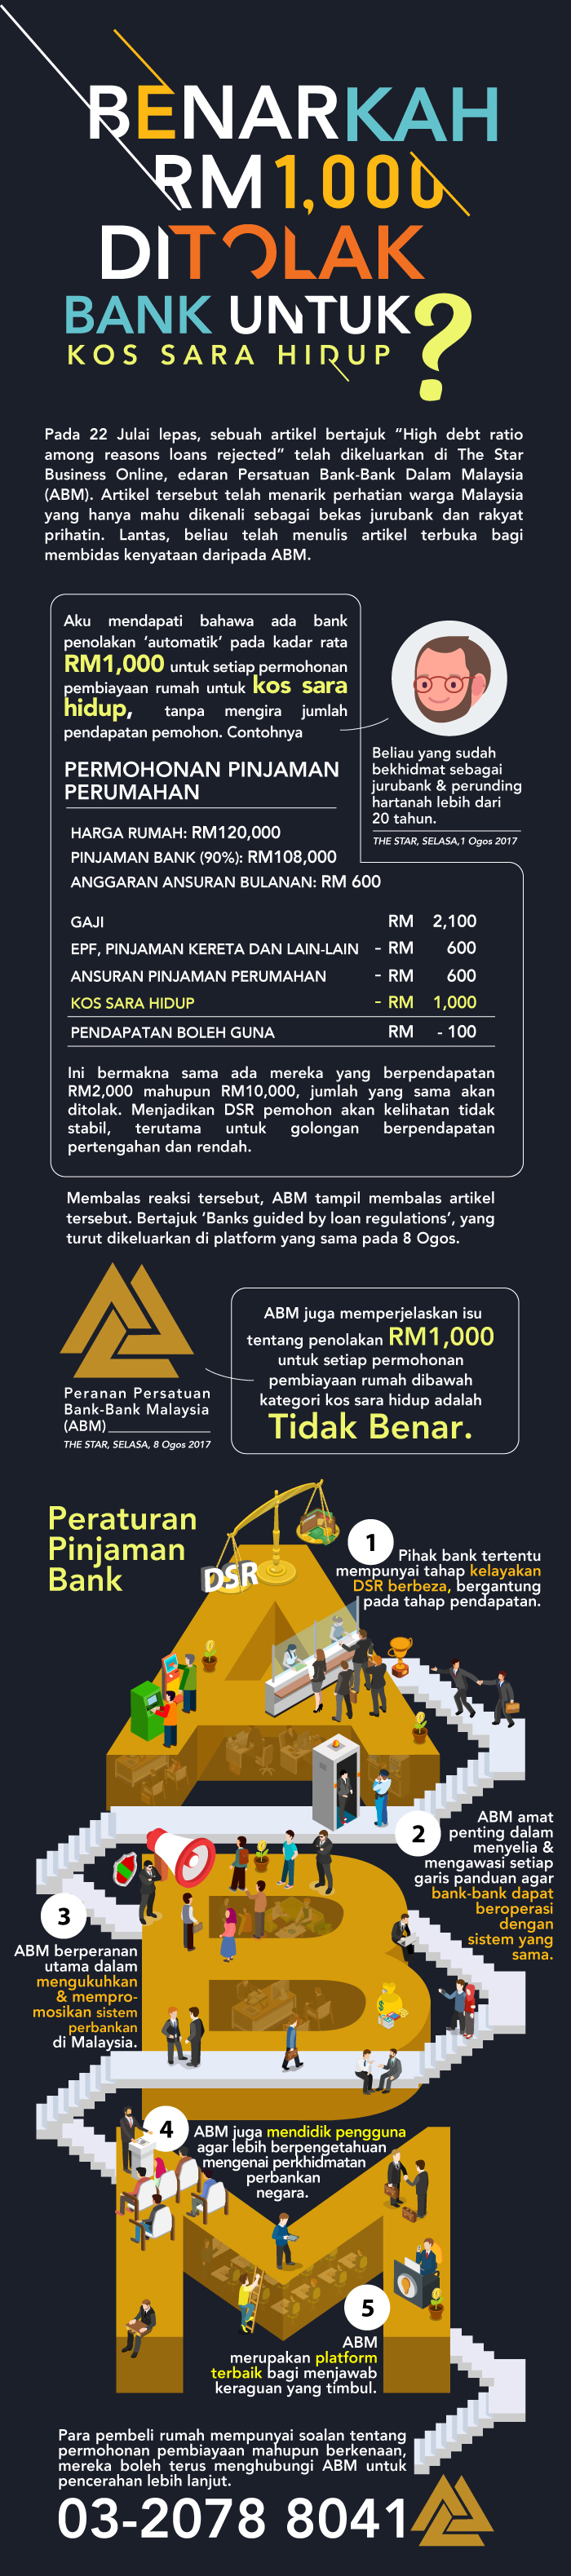 Mega3-Benarkah-RM1,000-Ditolak-Bank-4thOct2017.jpg